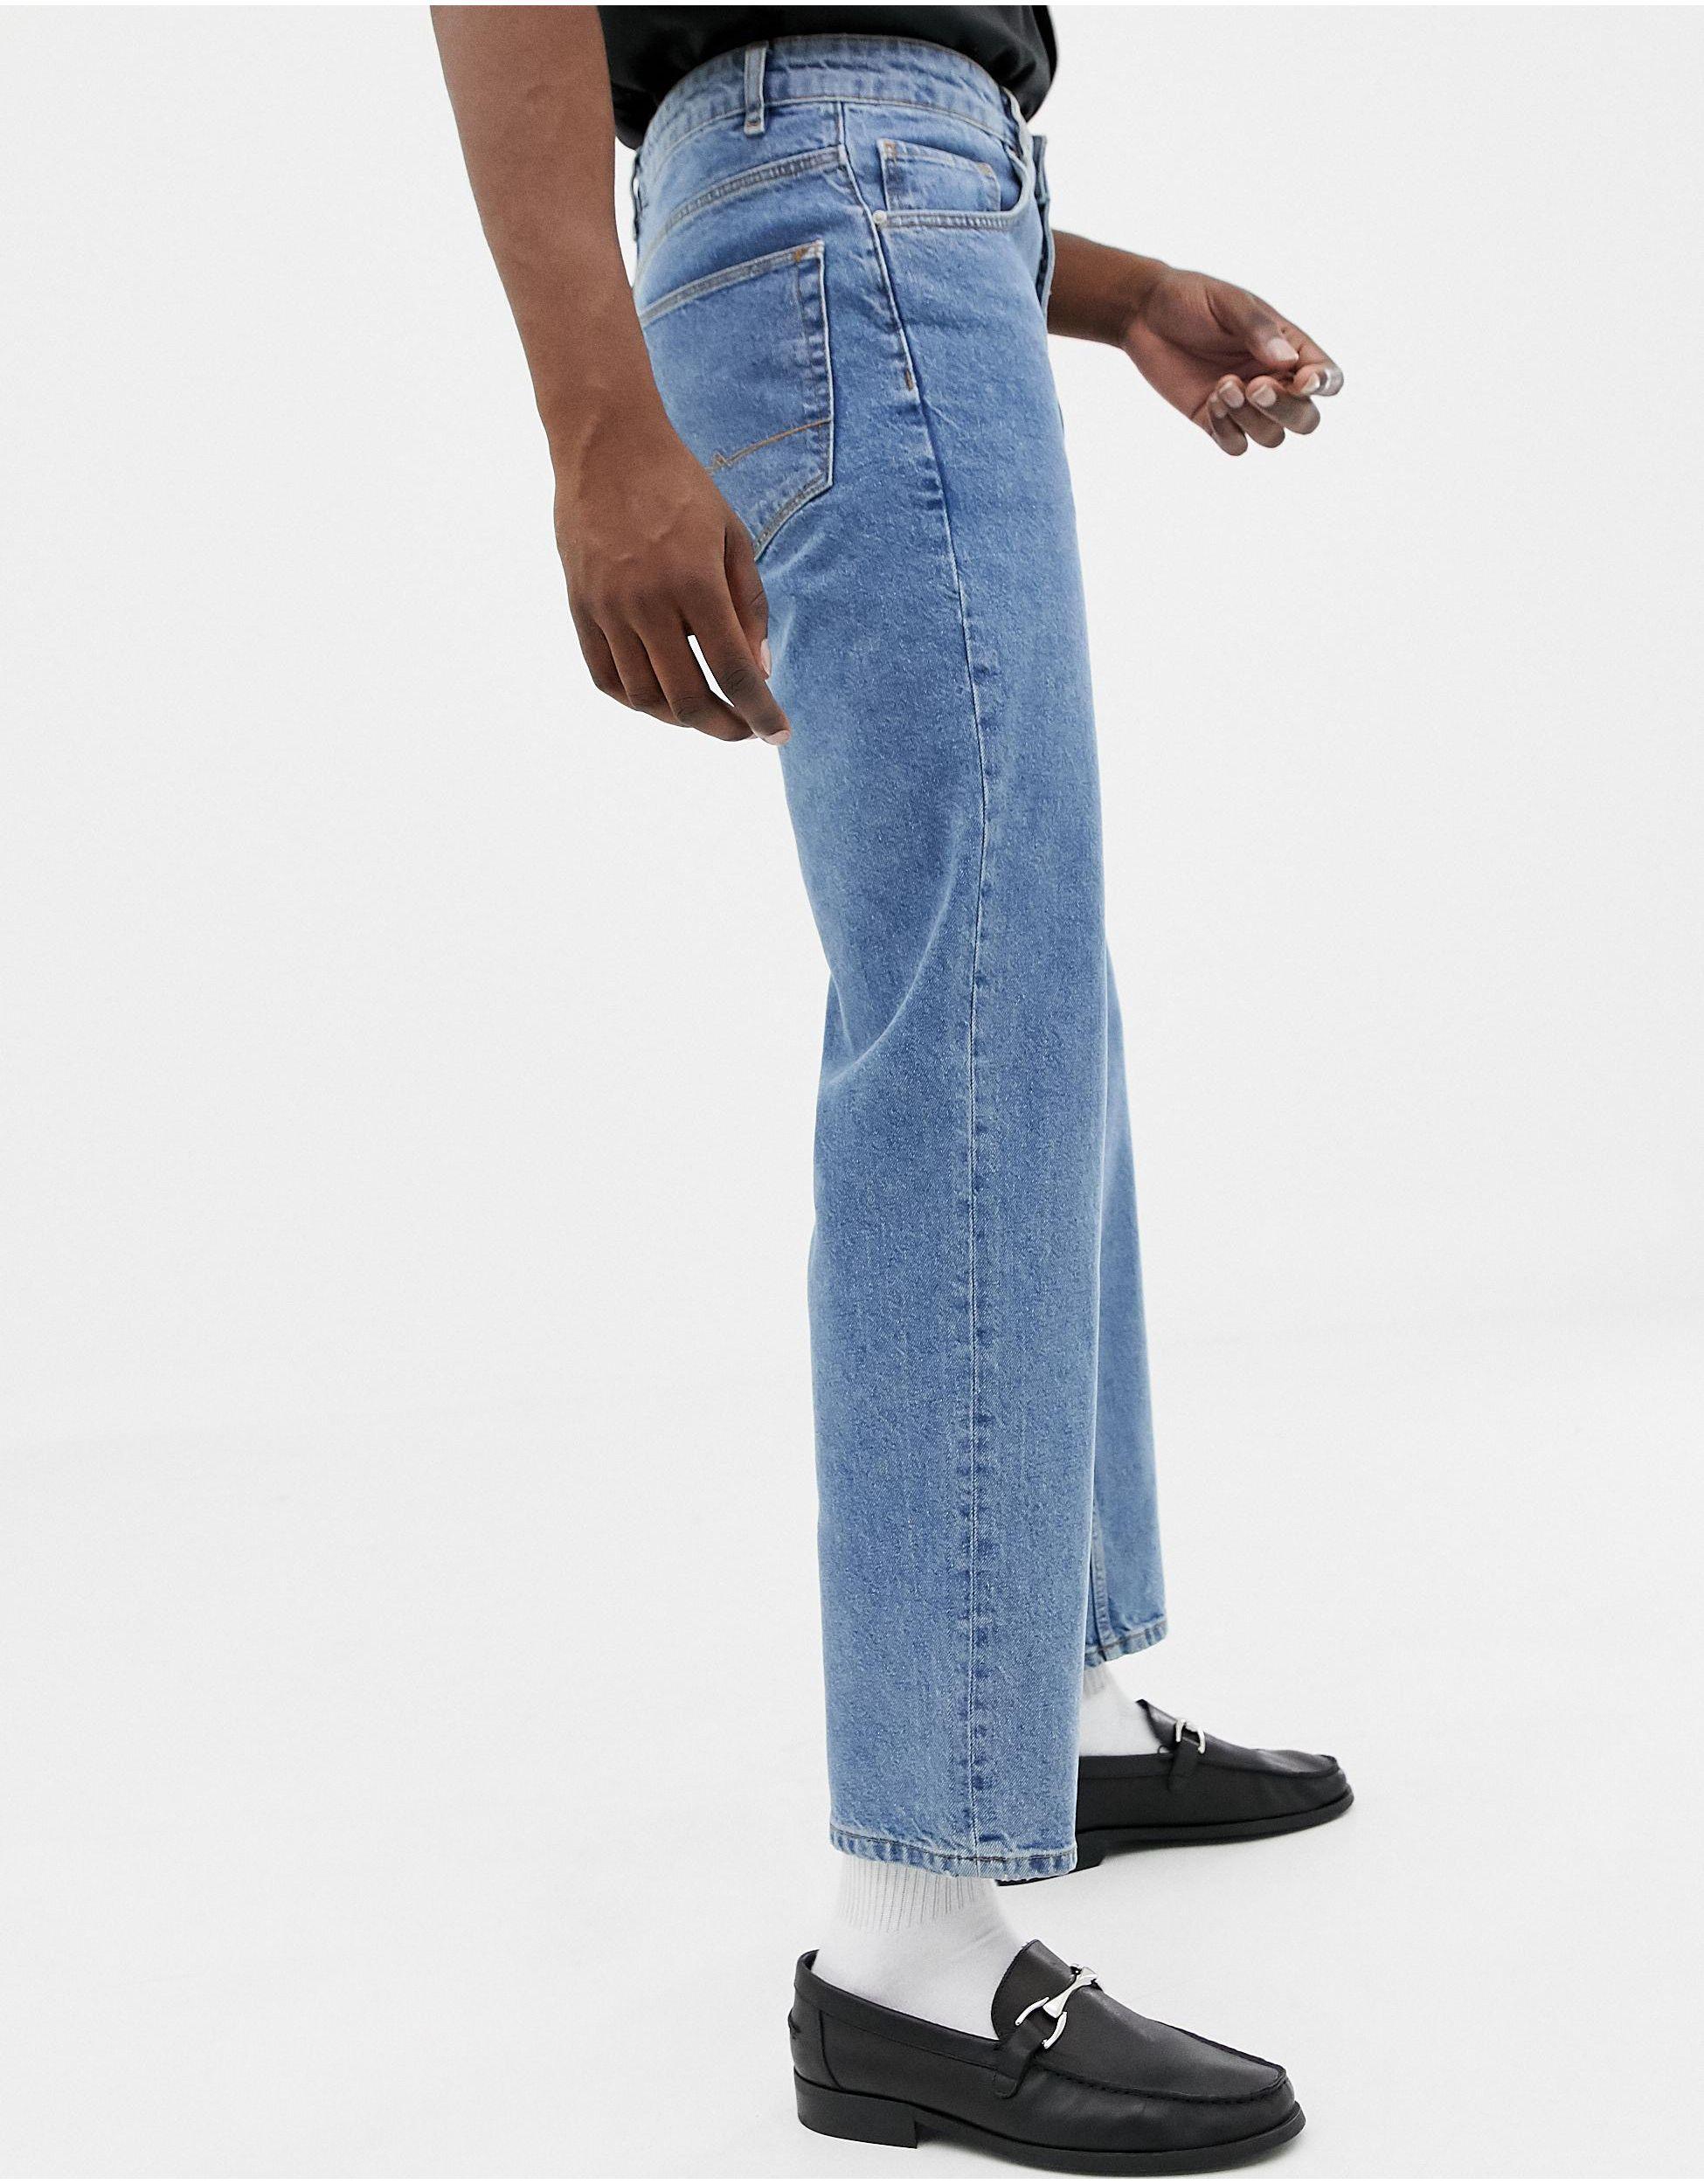 ASOS Denim High Waisted Jeans in Blue for Men - Lyst